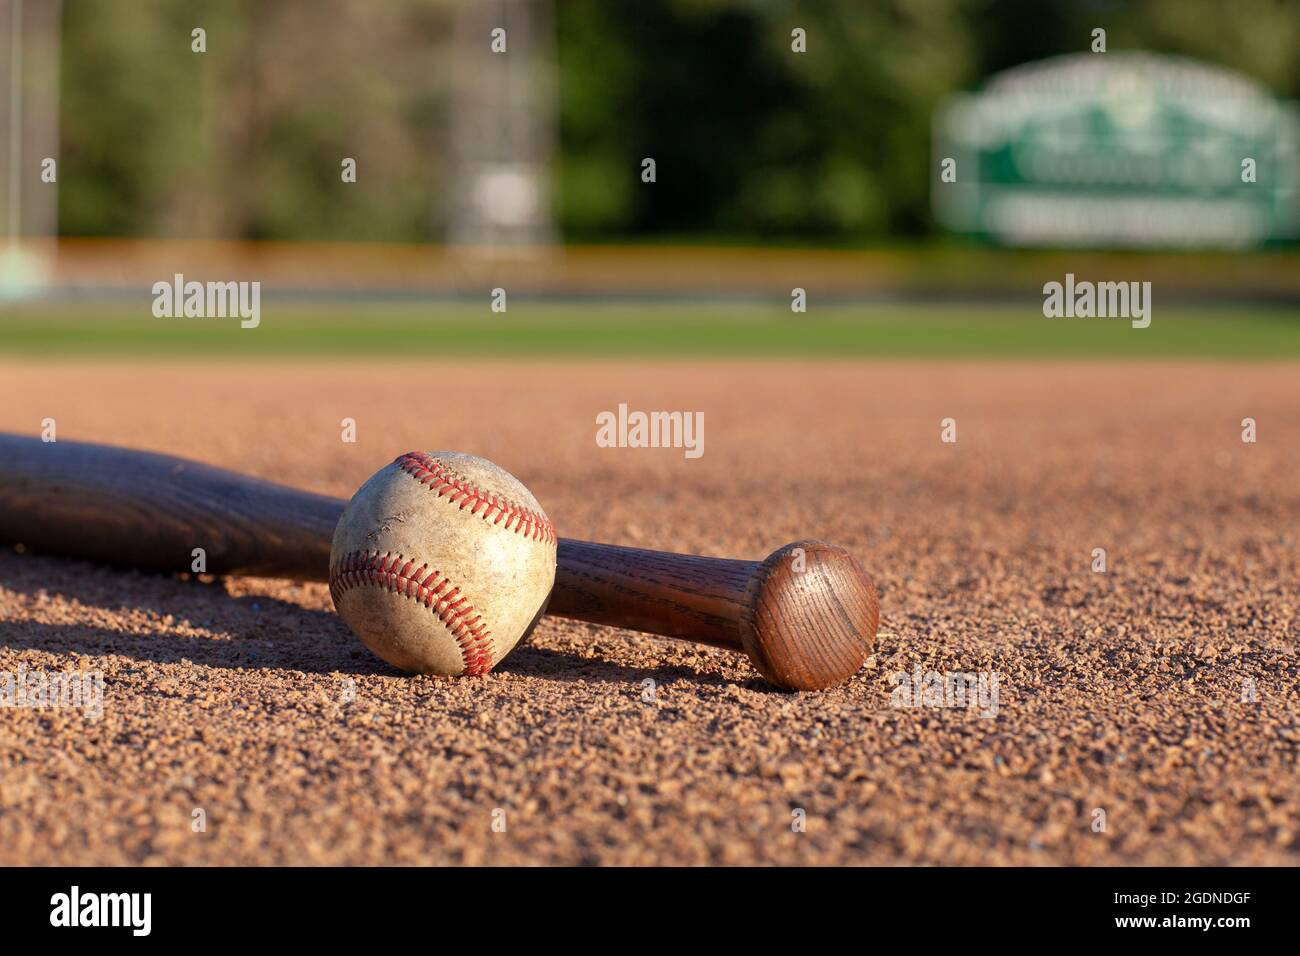 Baseballfeld und Schläger mit niedrigem Winkel und selektivem Fokus auf einem Baseballfeld Stockfoto